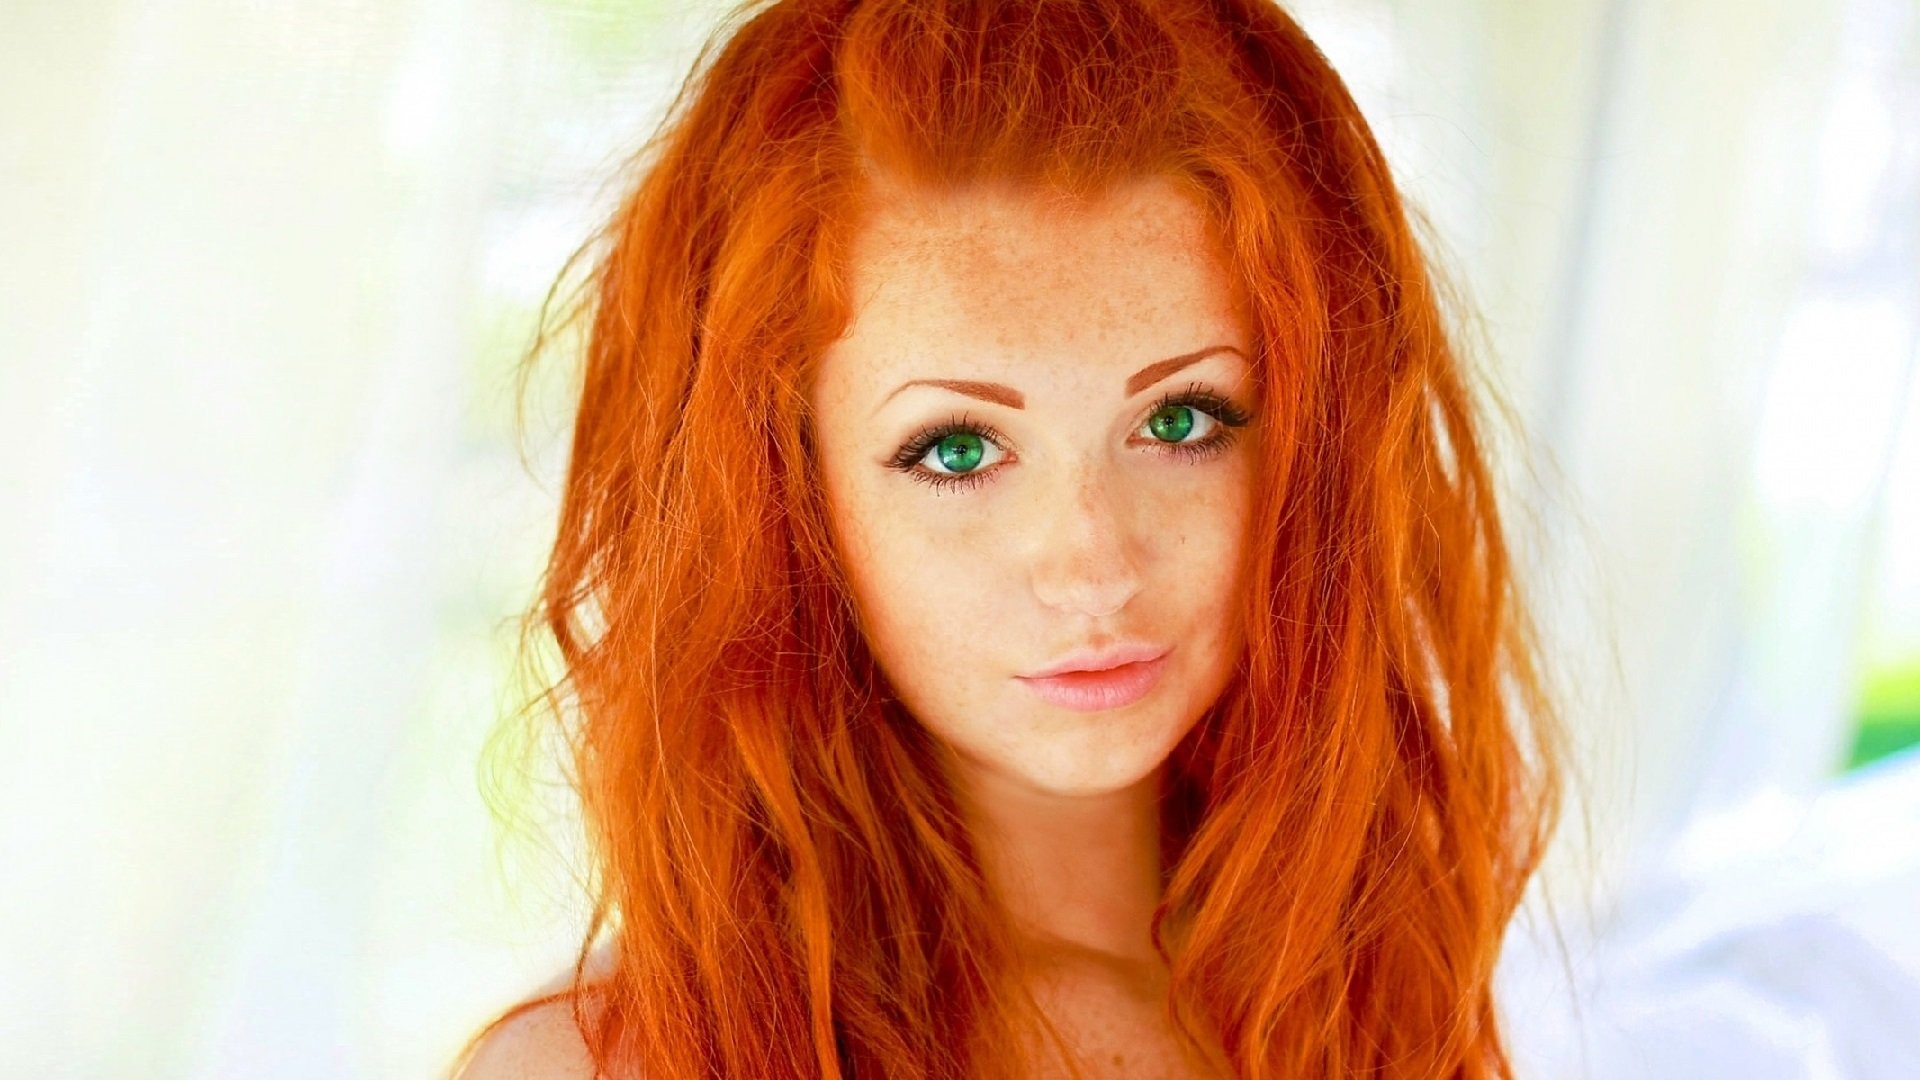 women model redhead long hair freckles portrait green eyes simple background Wallpaper